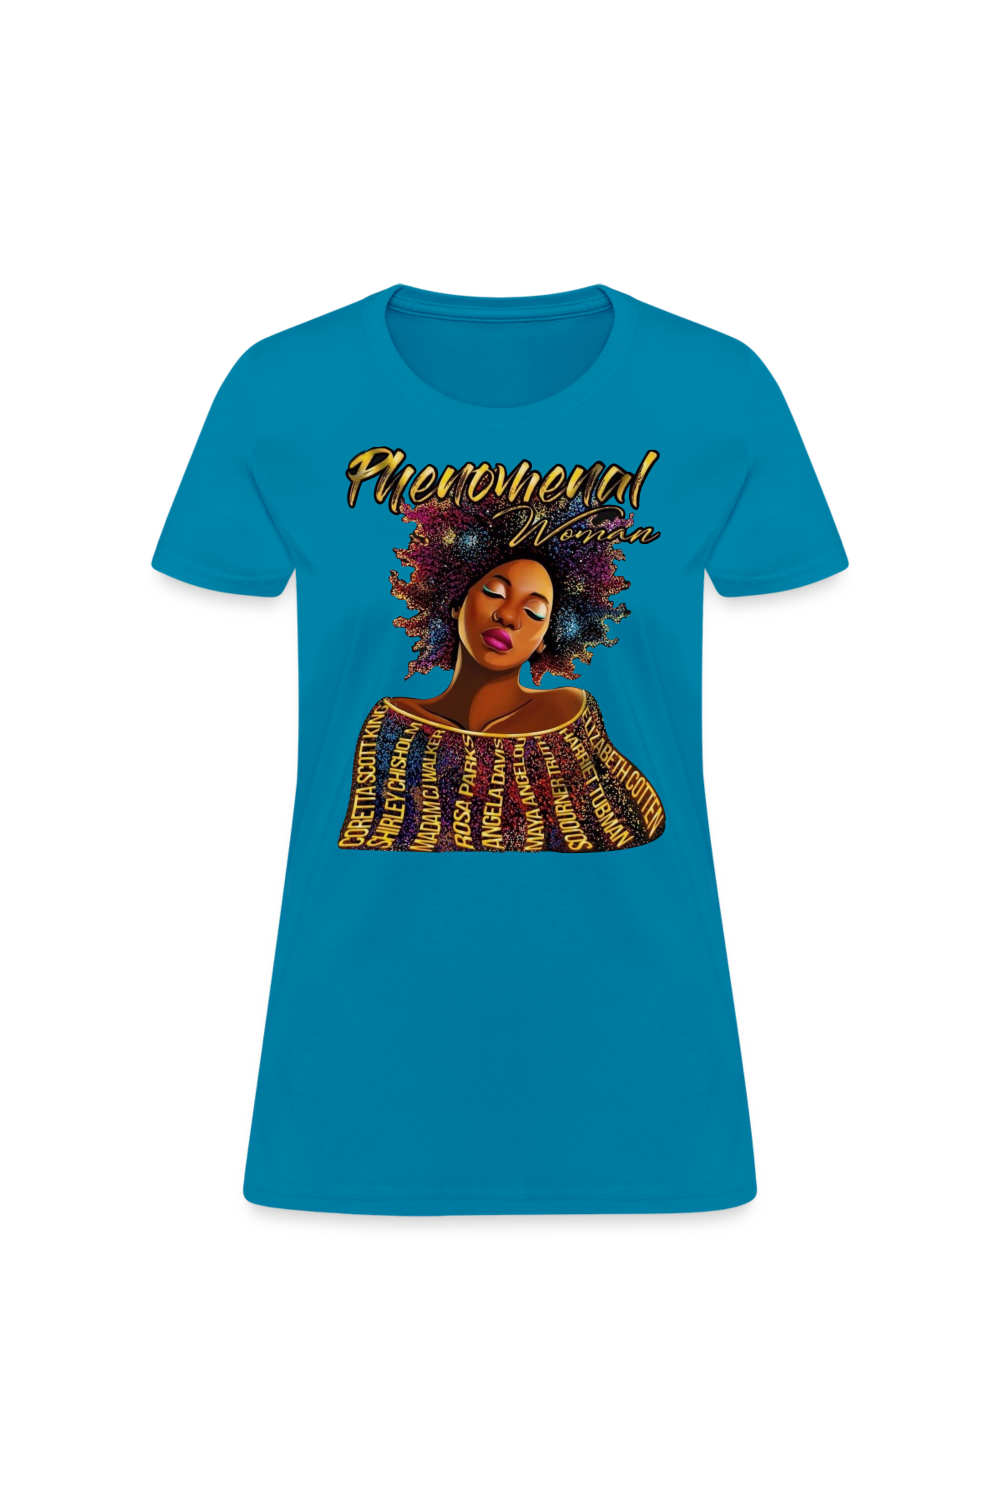 African American Women's Phenomenal Woman Short Sleeve T-Shirt - turquoise